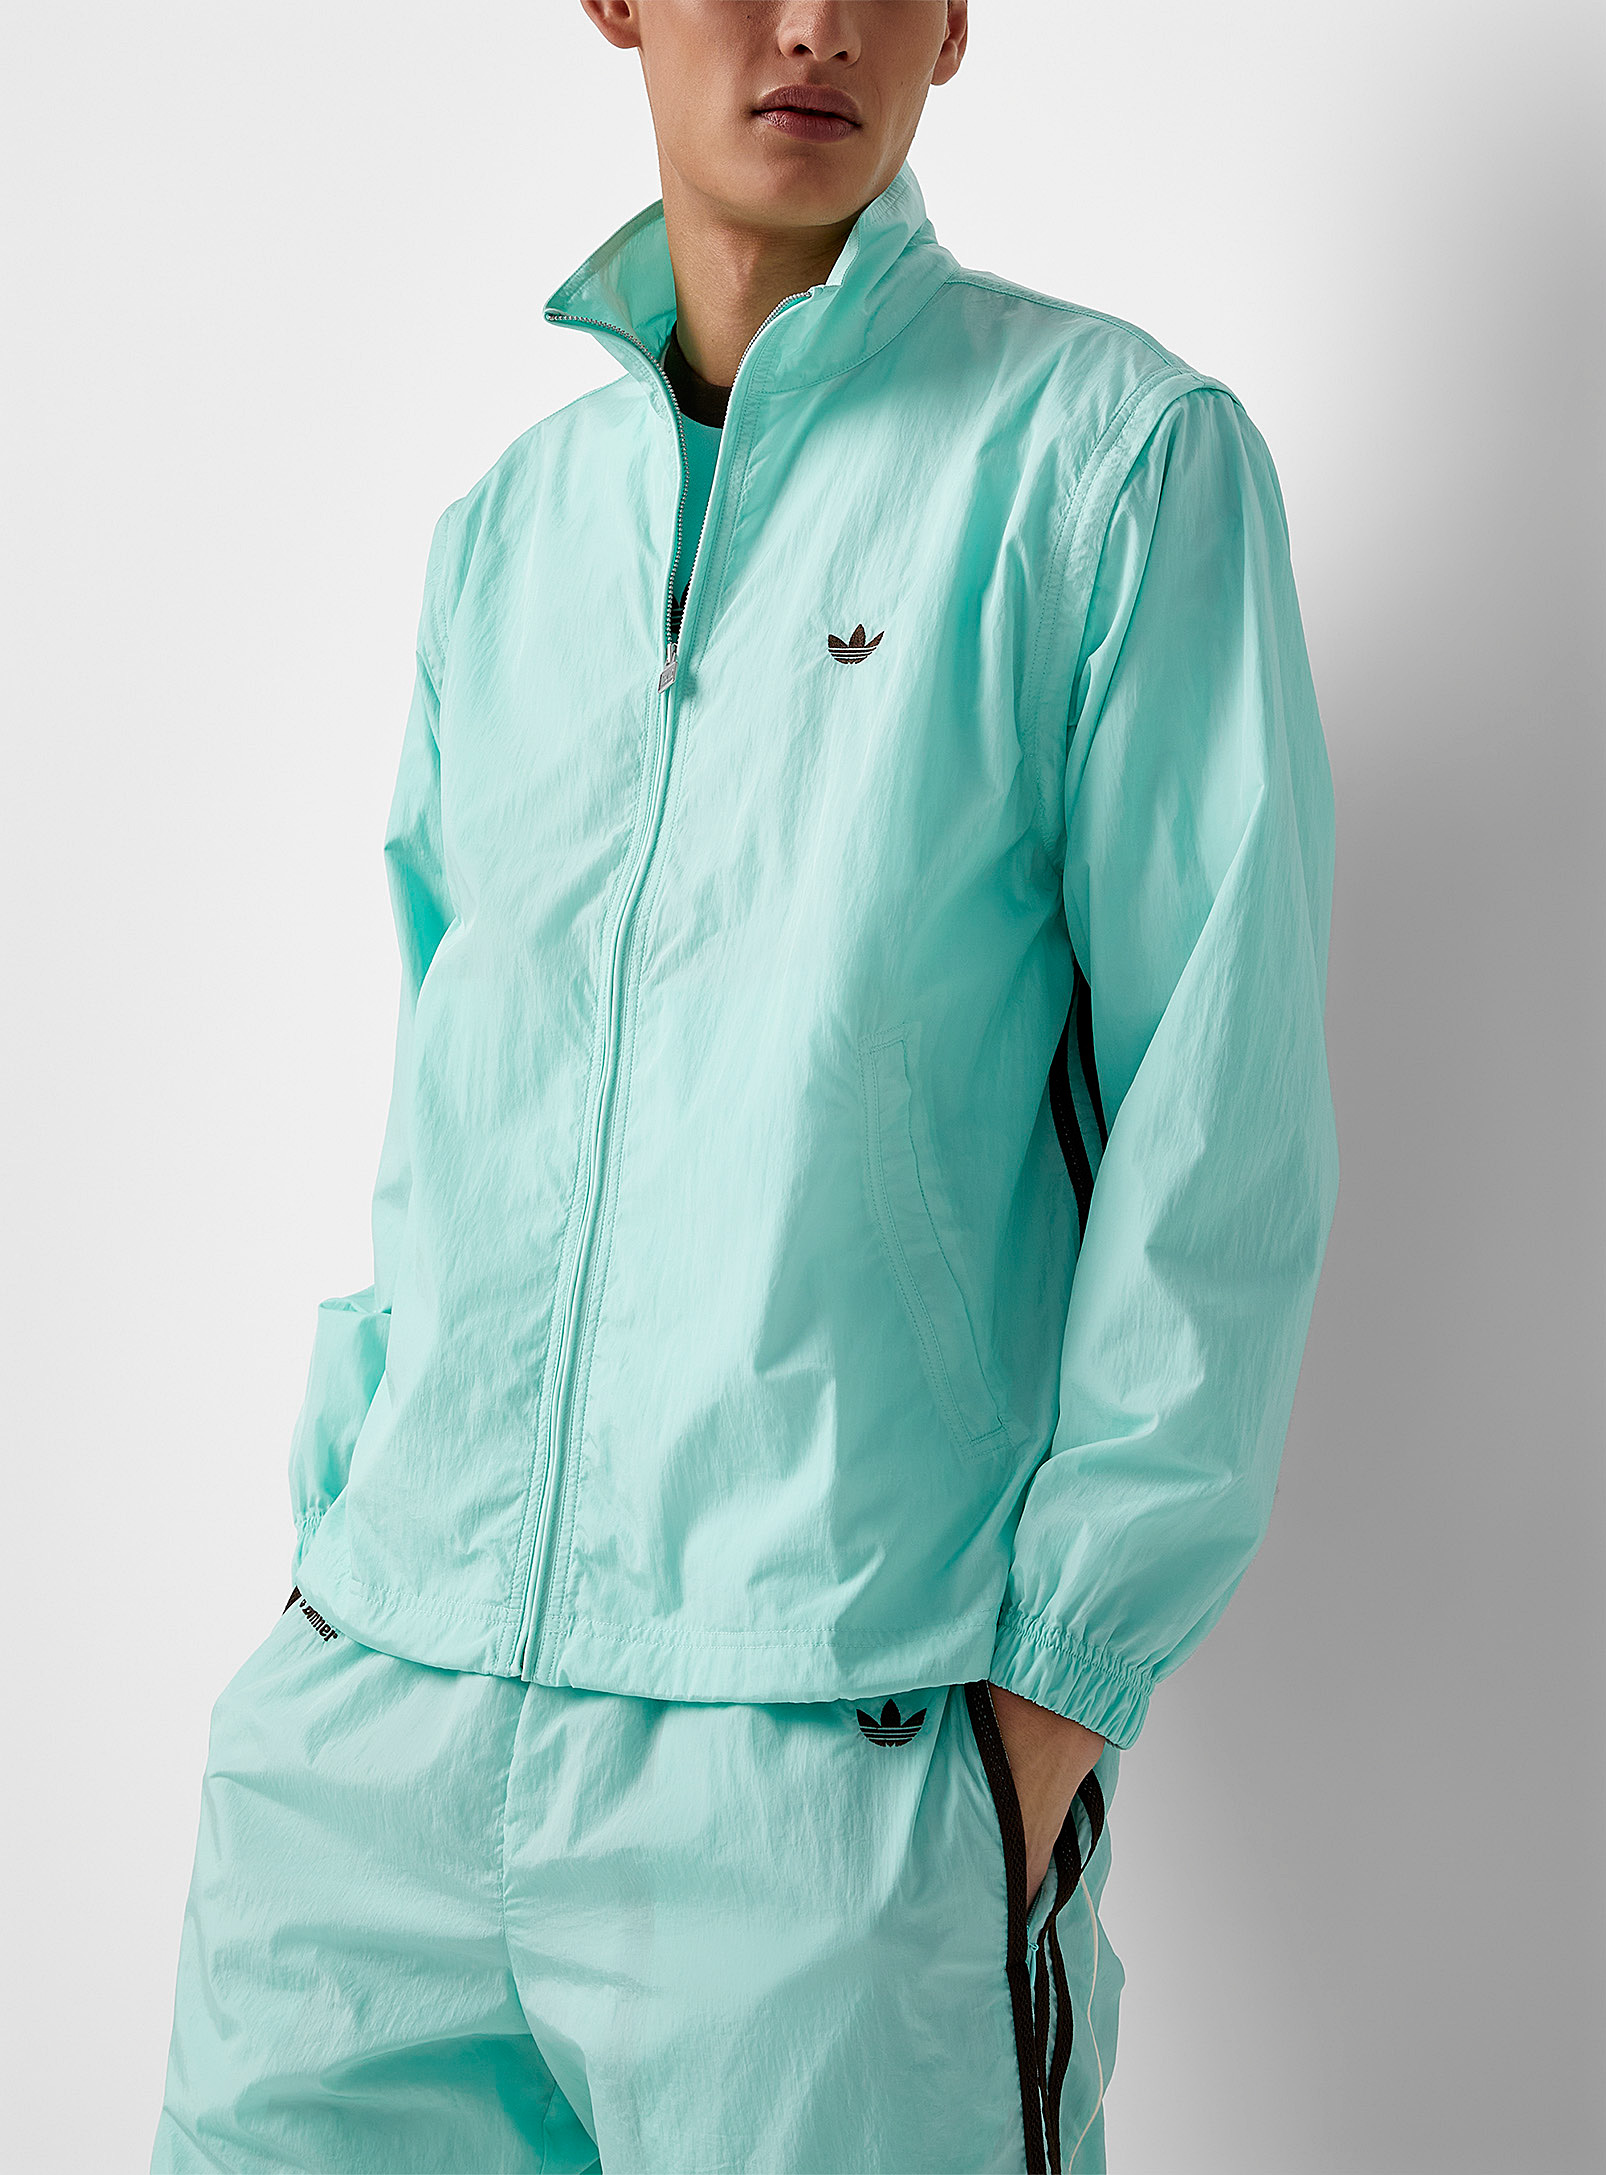 Adidas X Wales Bonner - Men's Nylon fabric convertible jacket